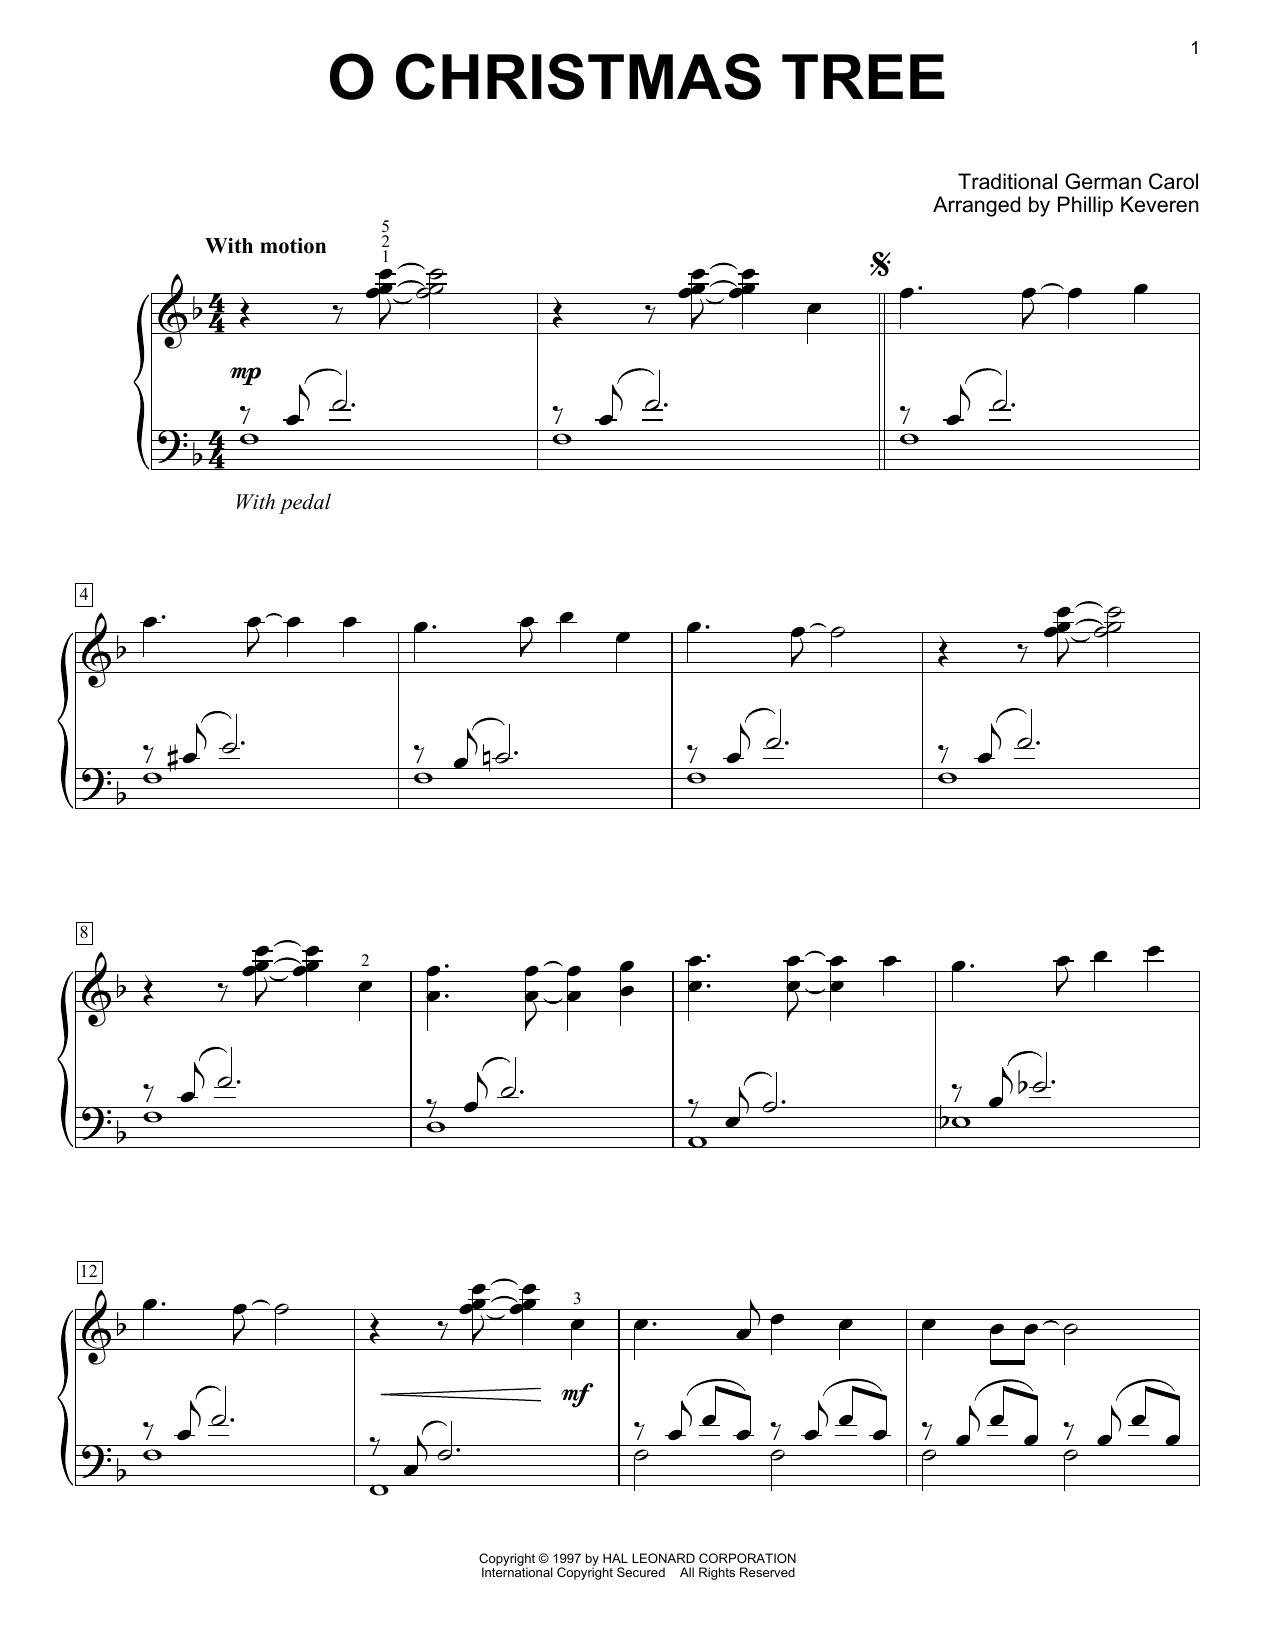 Traditional German Carol O Christmas Tree (arr. Phillip Keveren) sheet music notes printable PDF score